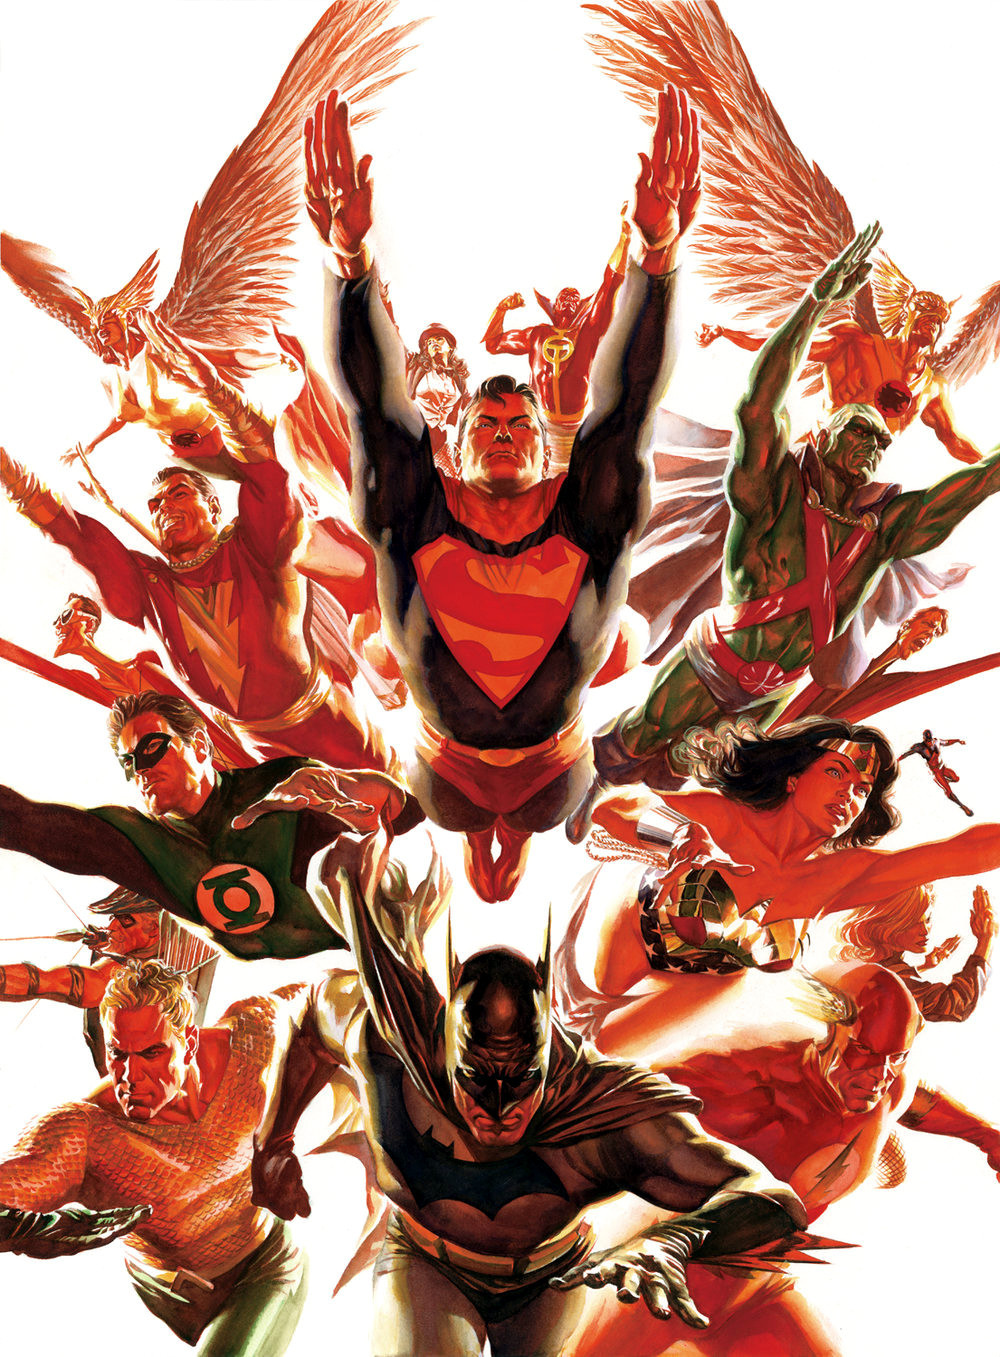 Justice League by Alex ross